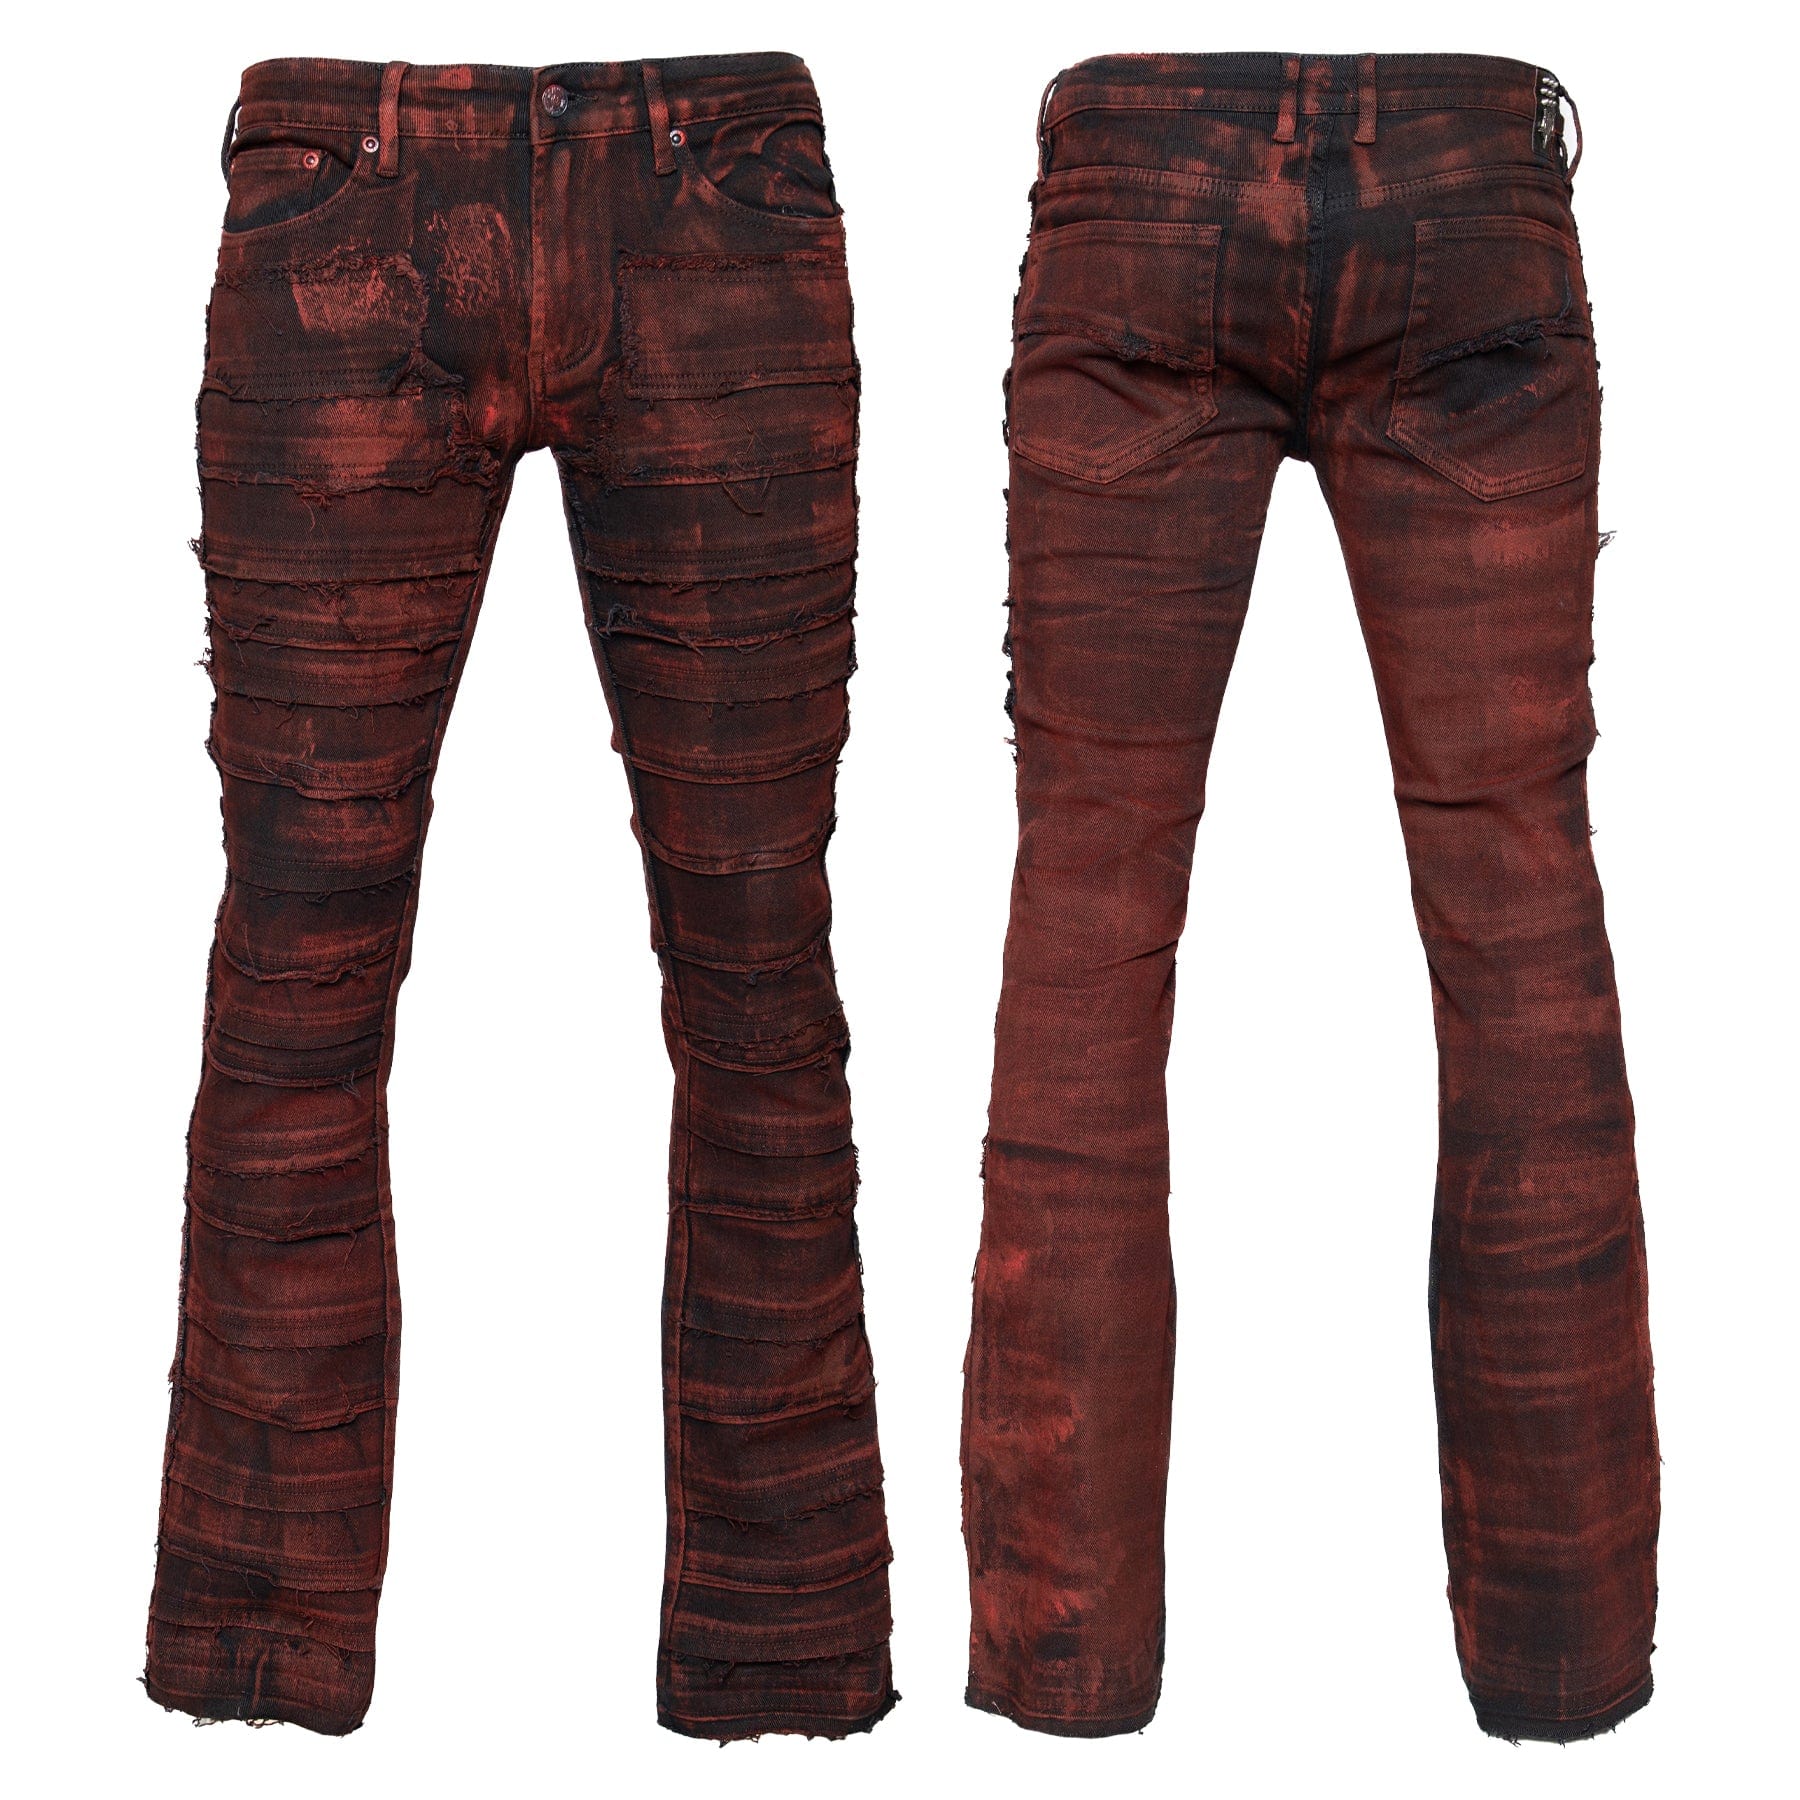 Custom Chop Shop Pants Wornstar Custom Jeans - Bandage - Crimson Alloy Washed